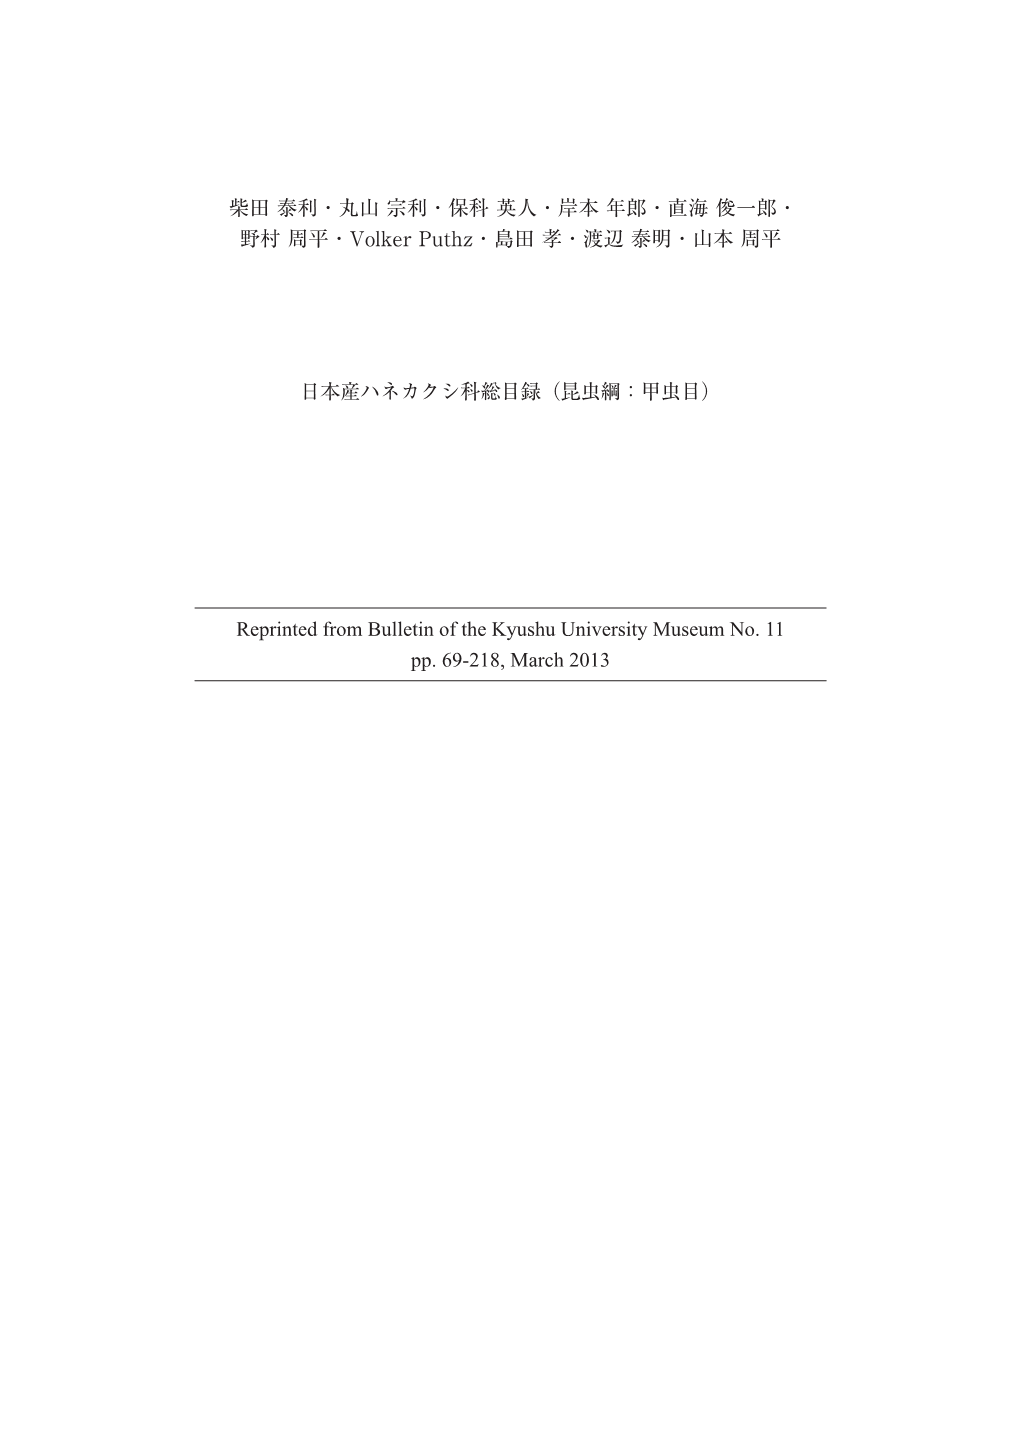 Reprinted from Bulletin of the Kyushu University Museum No. 11 Pp. 69-218, March 2013 九州大学総合研究博物館研究報告 Bull